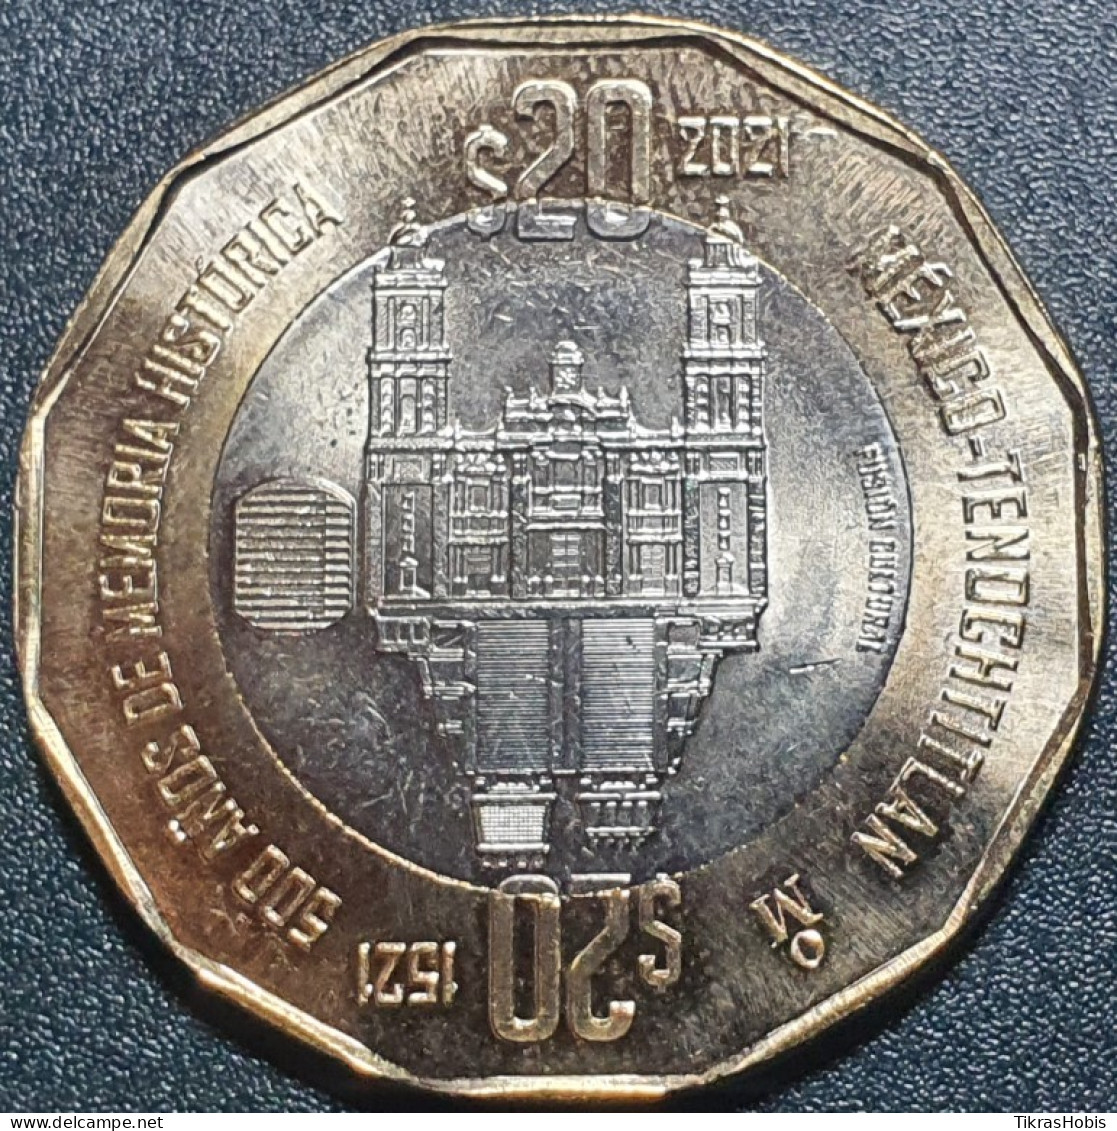 Mexico 20 Pesos, 2021 Tenochtitlan Collapse 500 UC105 - Mexique